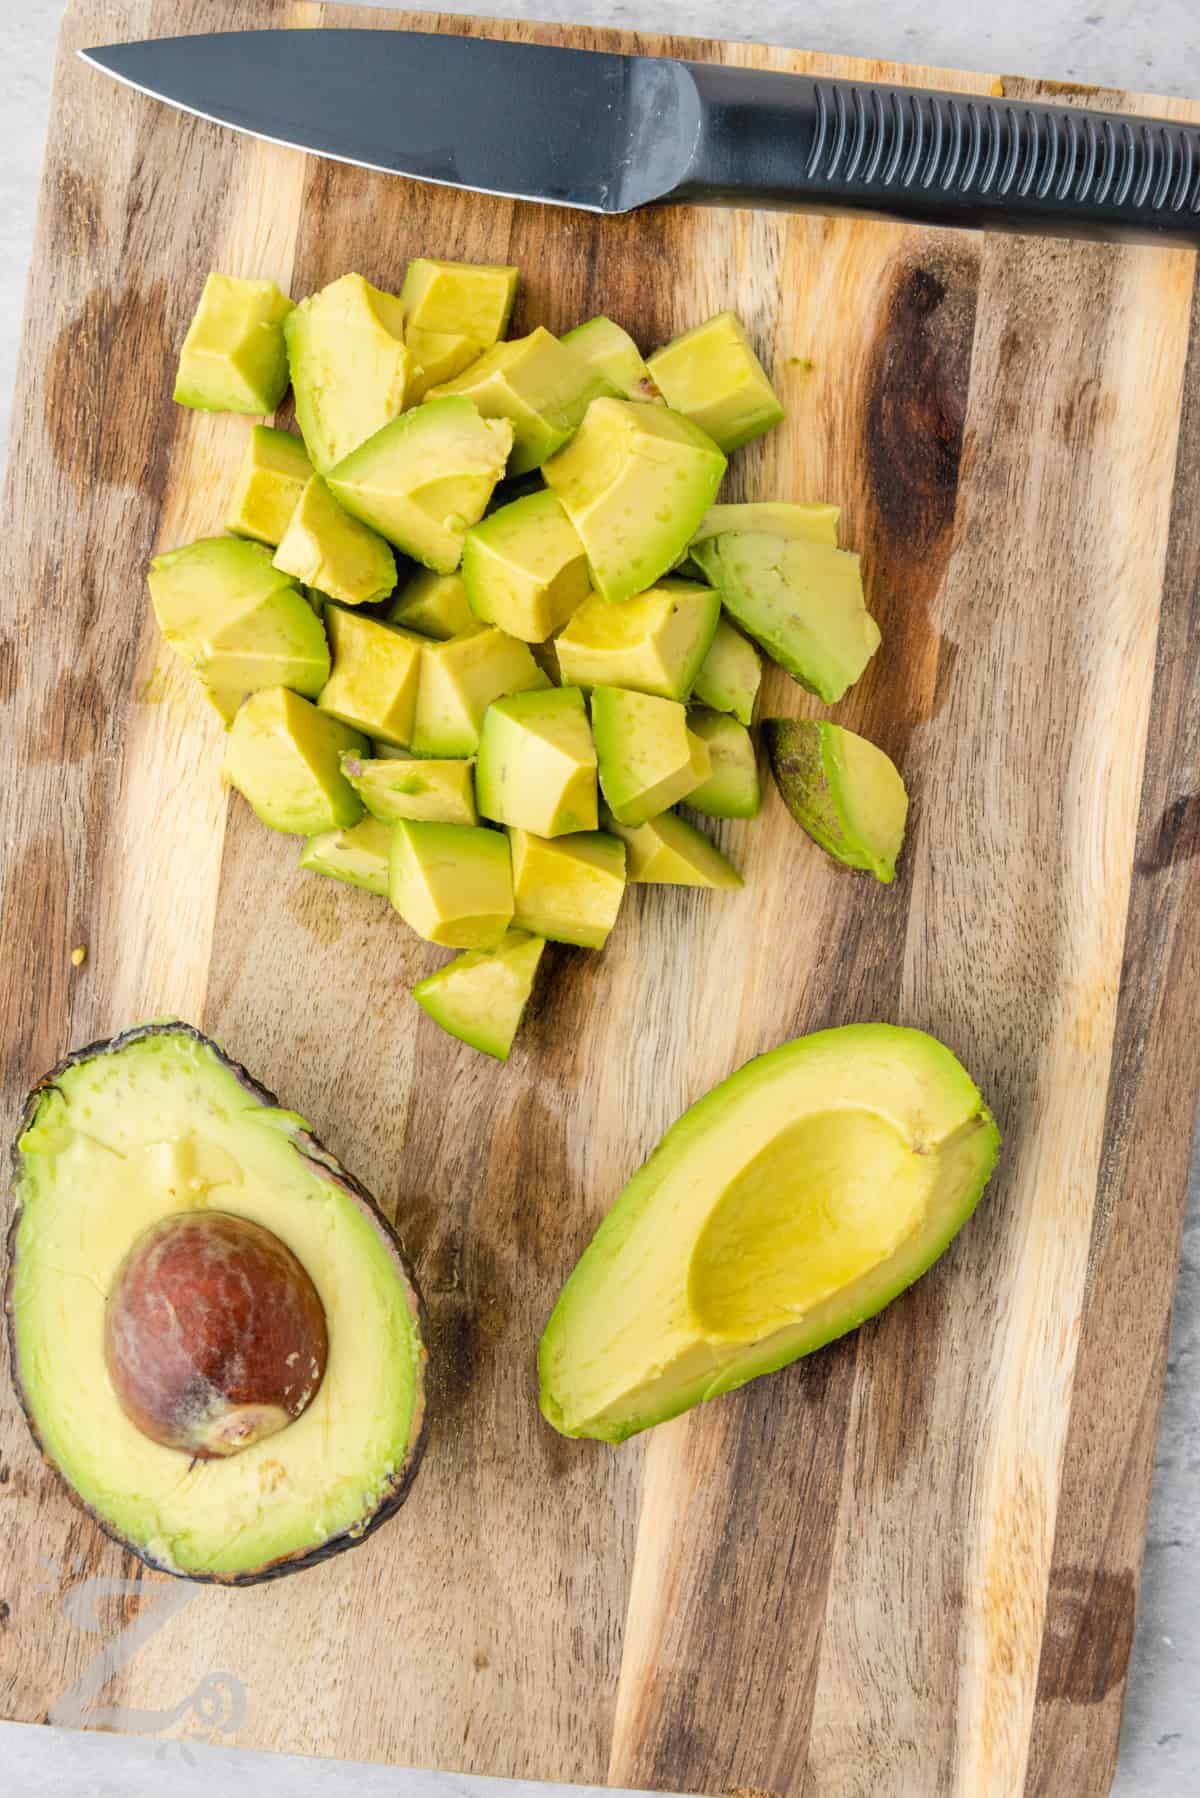 Avocado being chopped on a cutting board